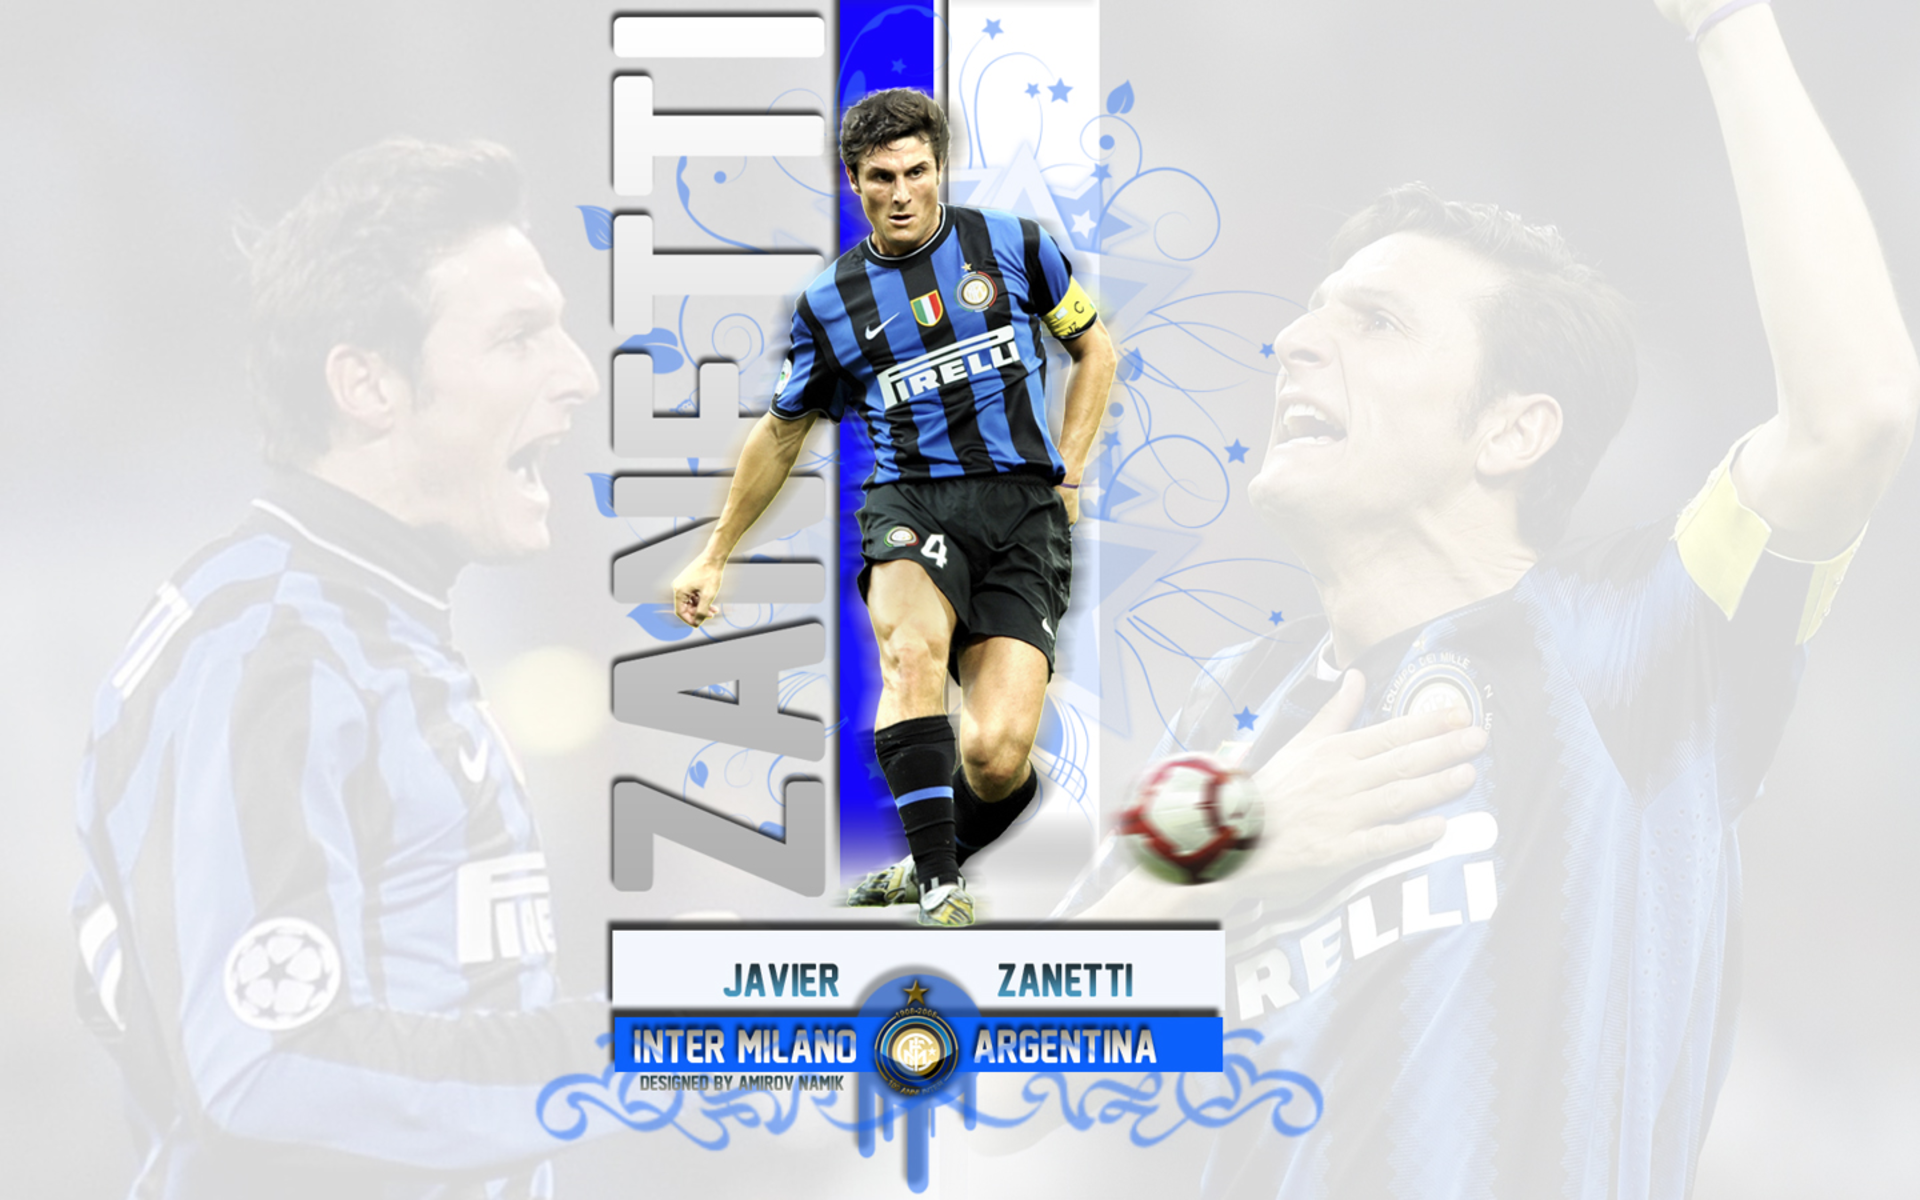 Javier Zanetti Wallpapers